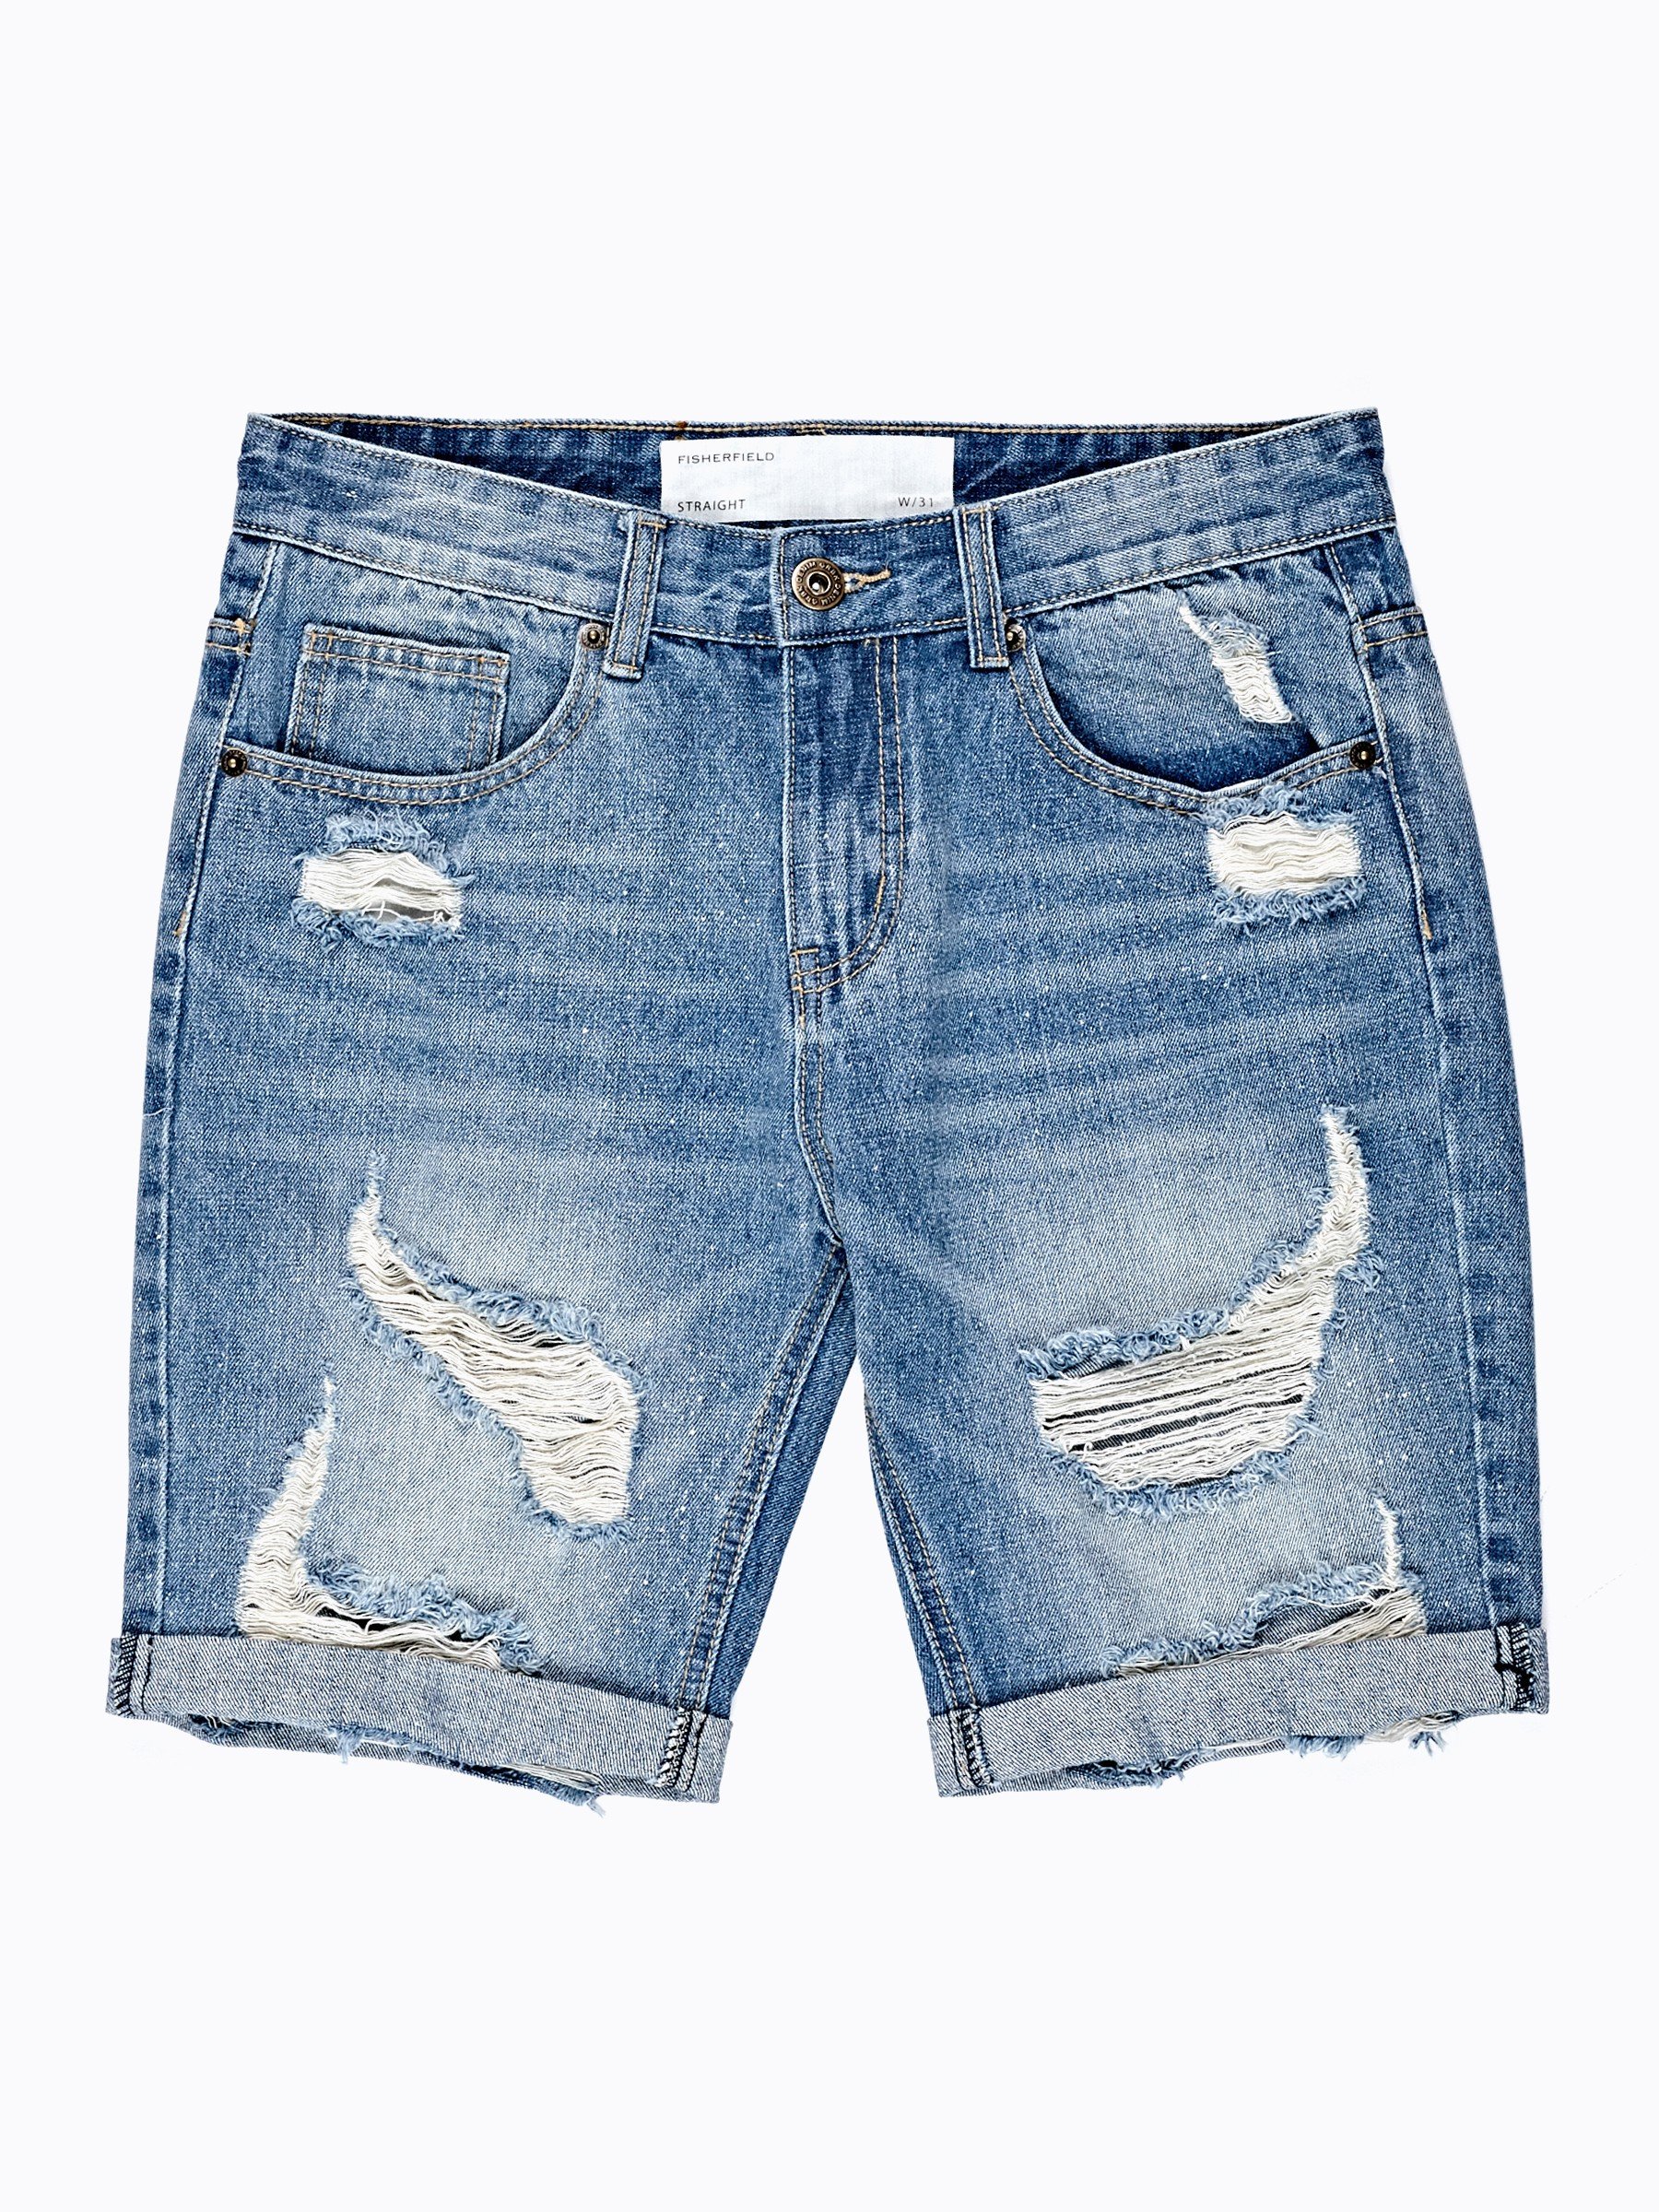 destroyed jean shorts